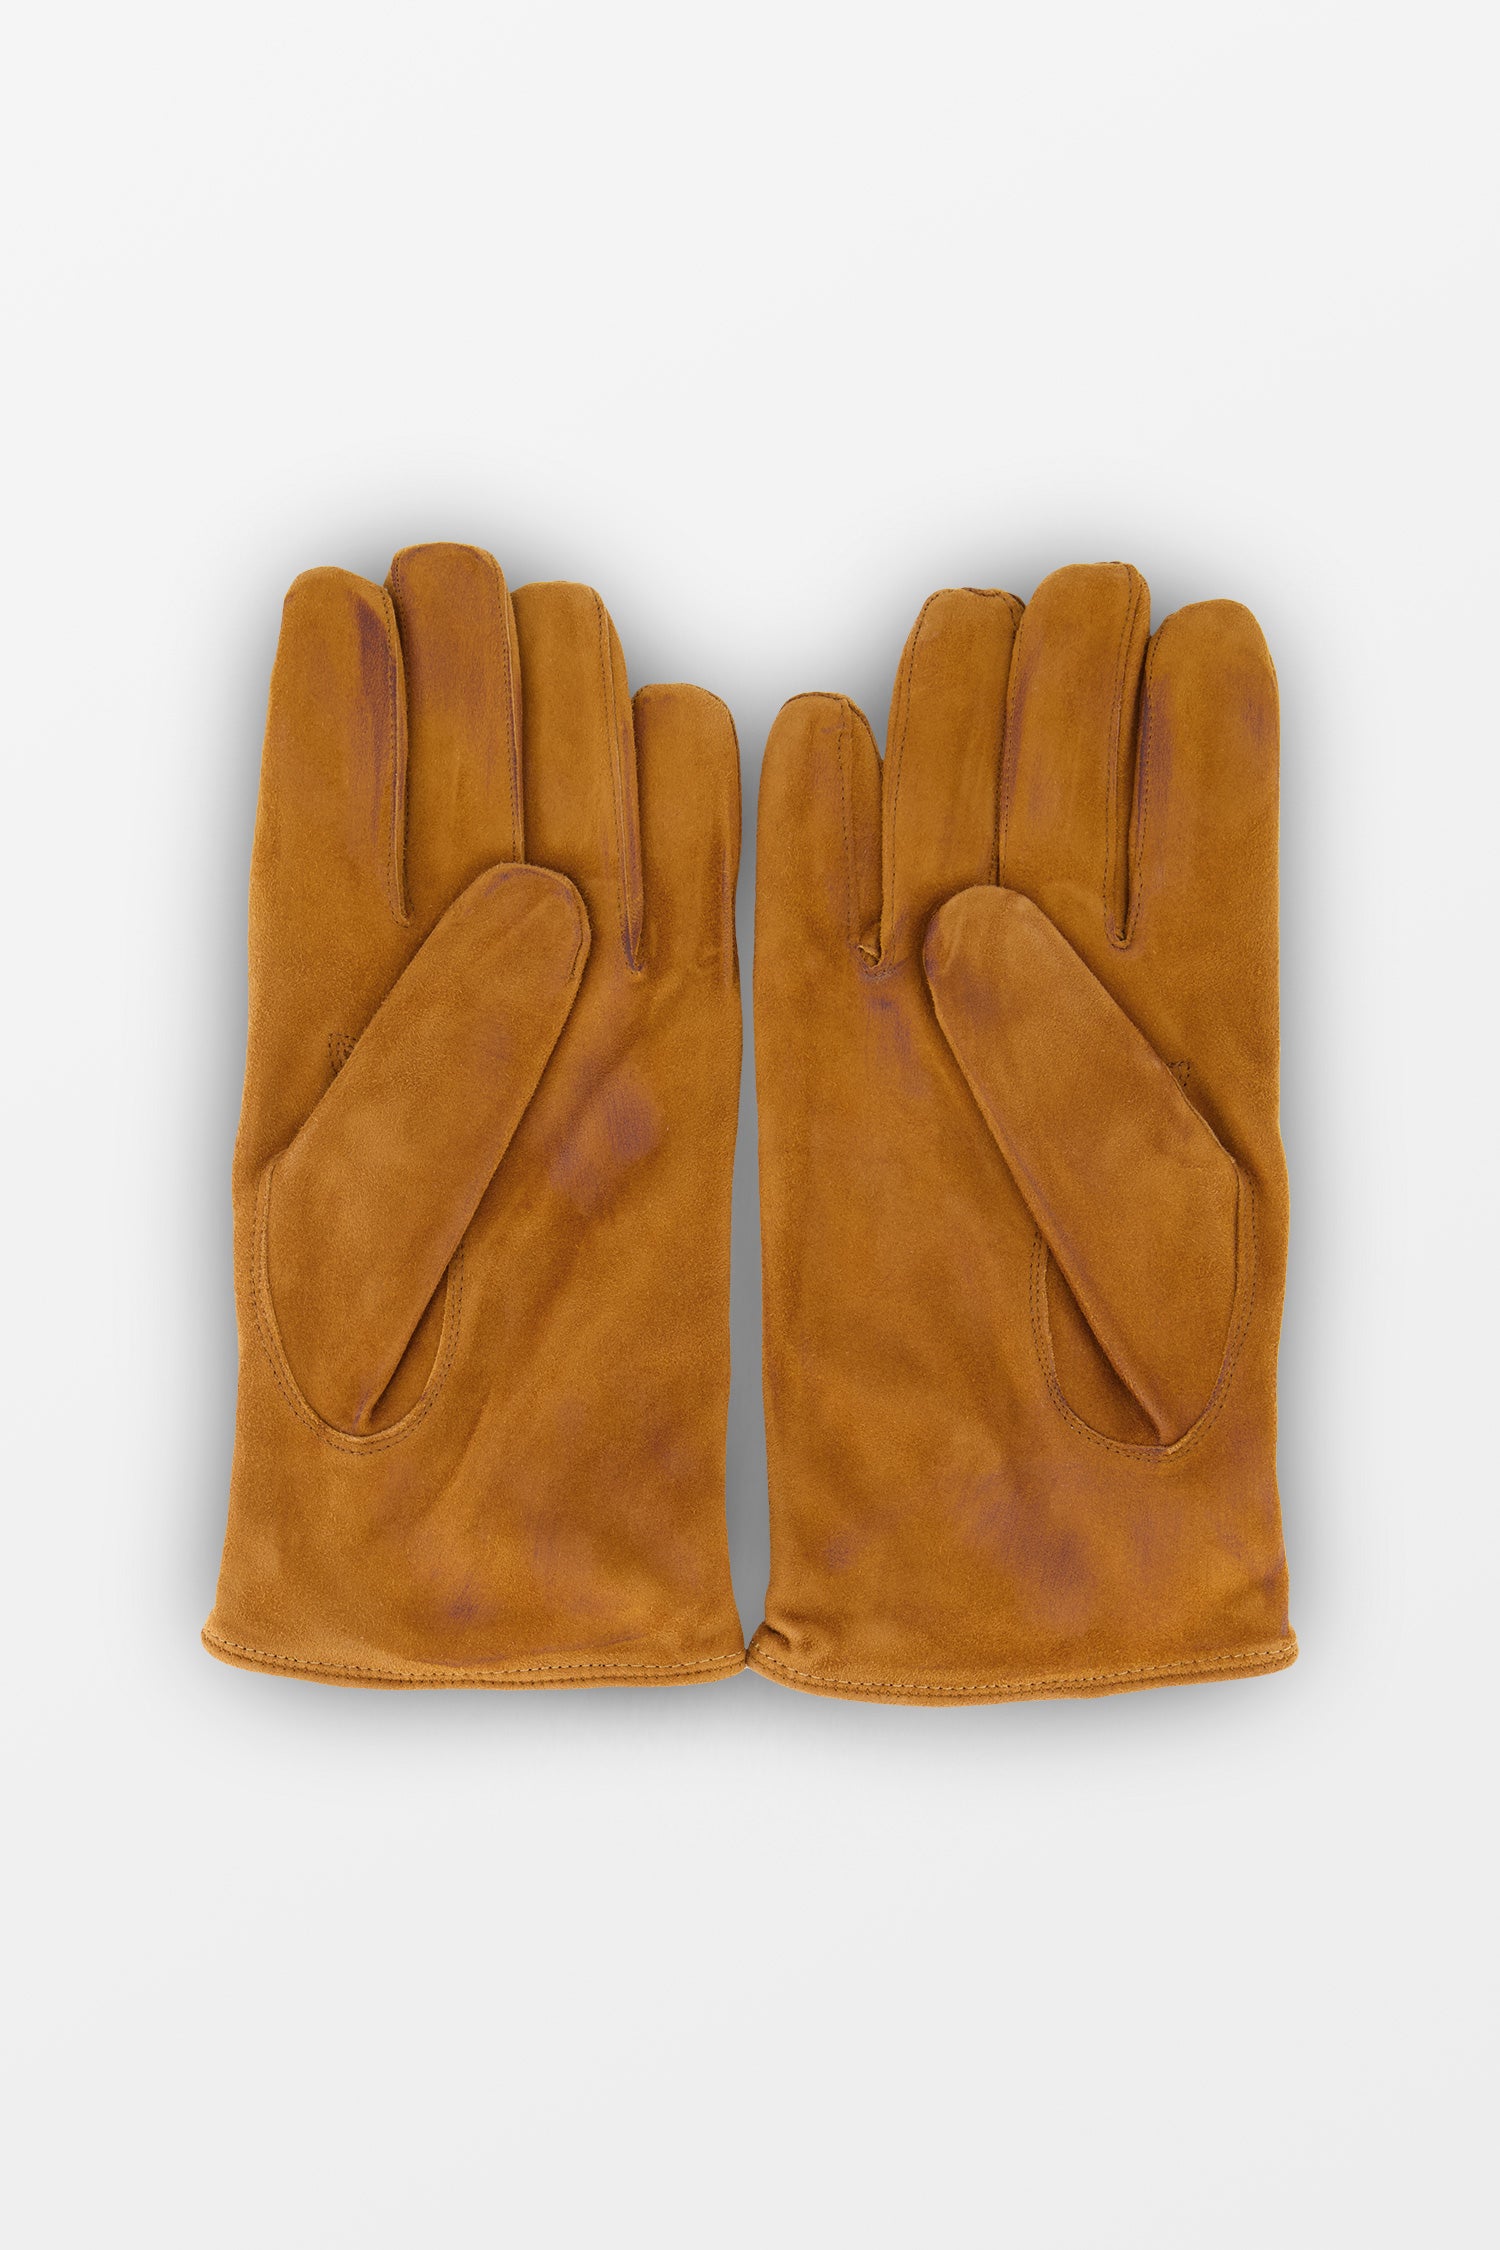 Barba Napoli Leather Brown Gloves